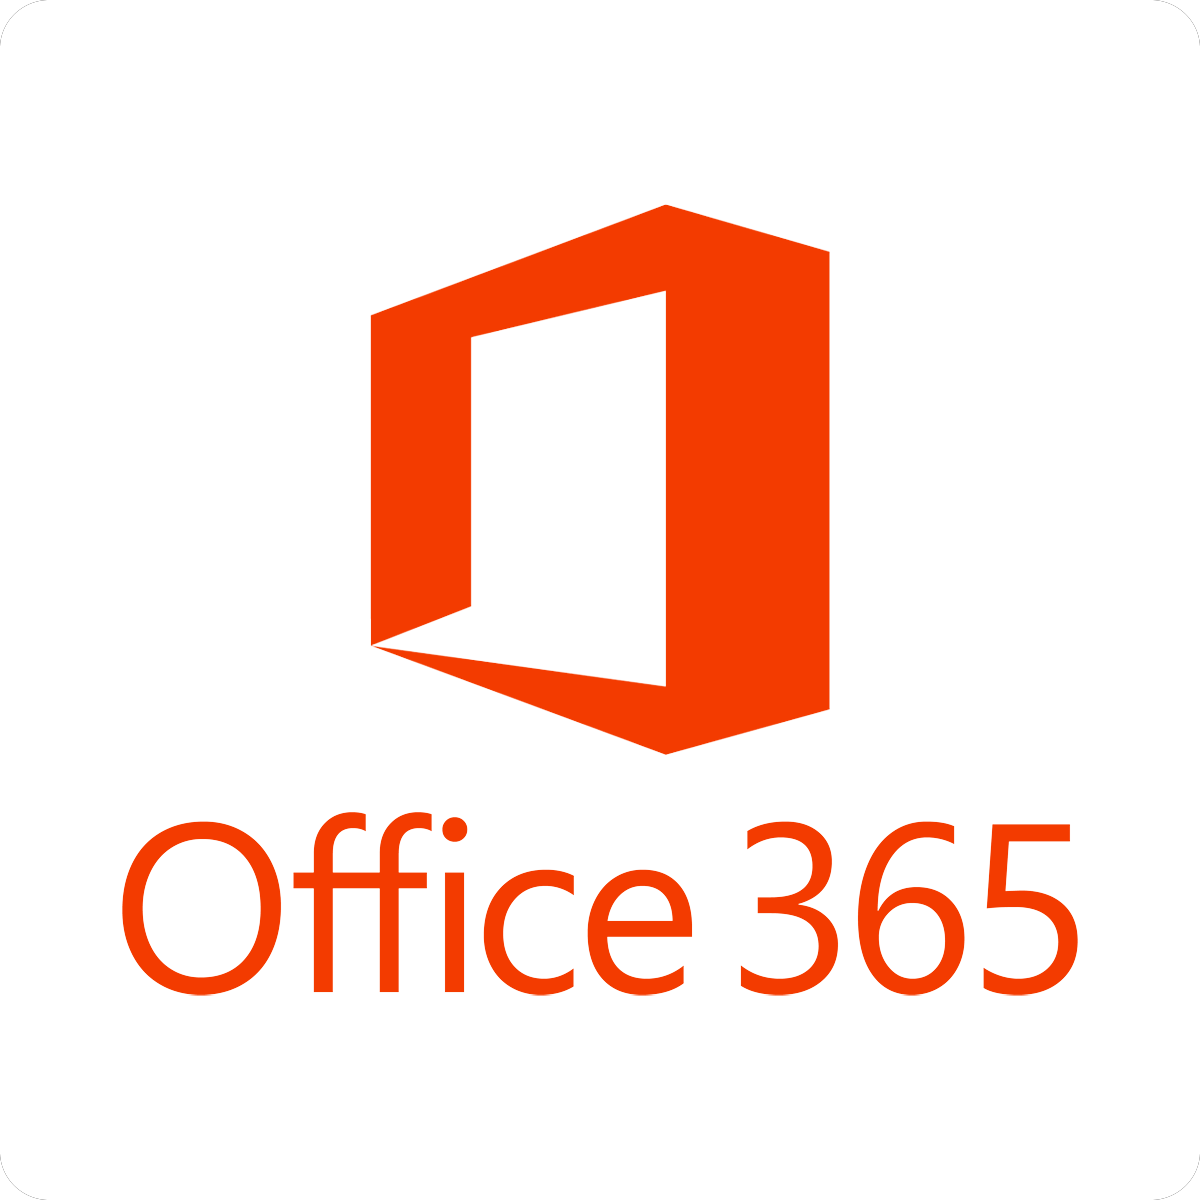 Microsoft Office 365 plandetransformacion.unirioja.es